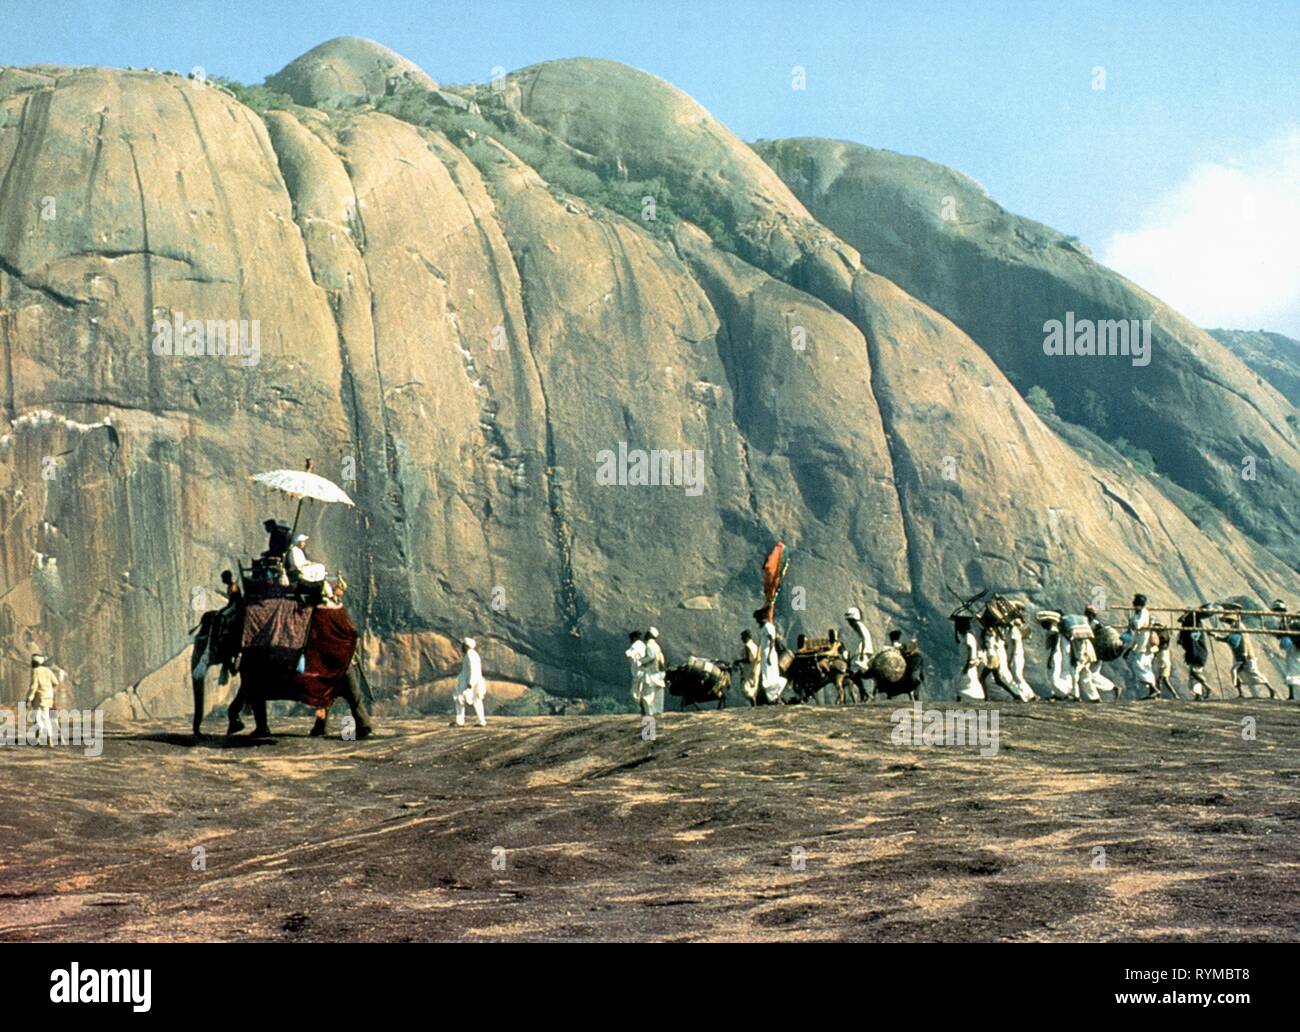 MOVIE SCENE, A PASSAGE TO INDIA, 1984 Stock Photo